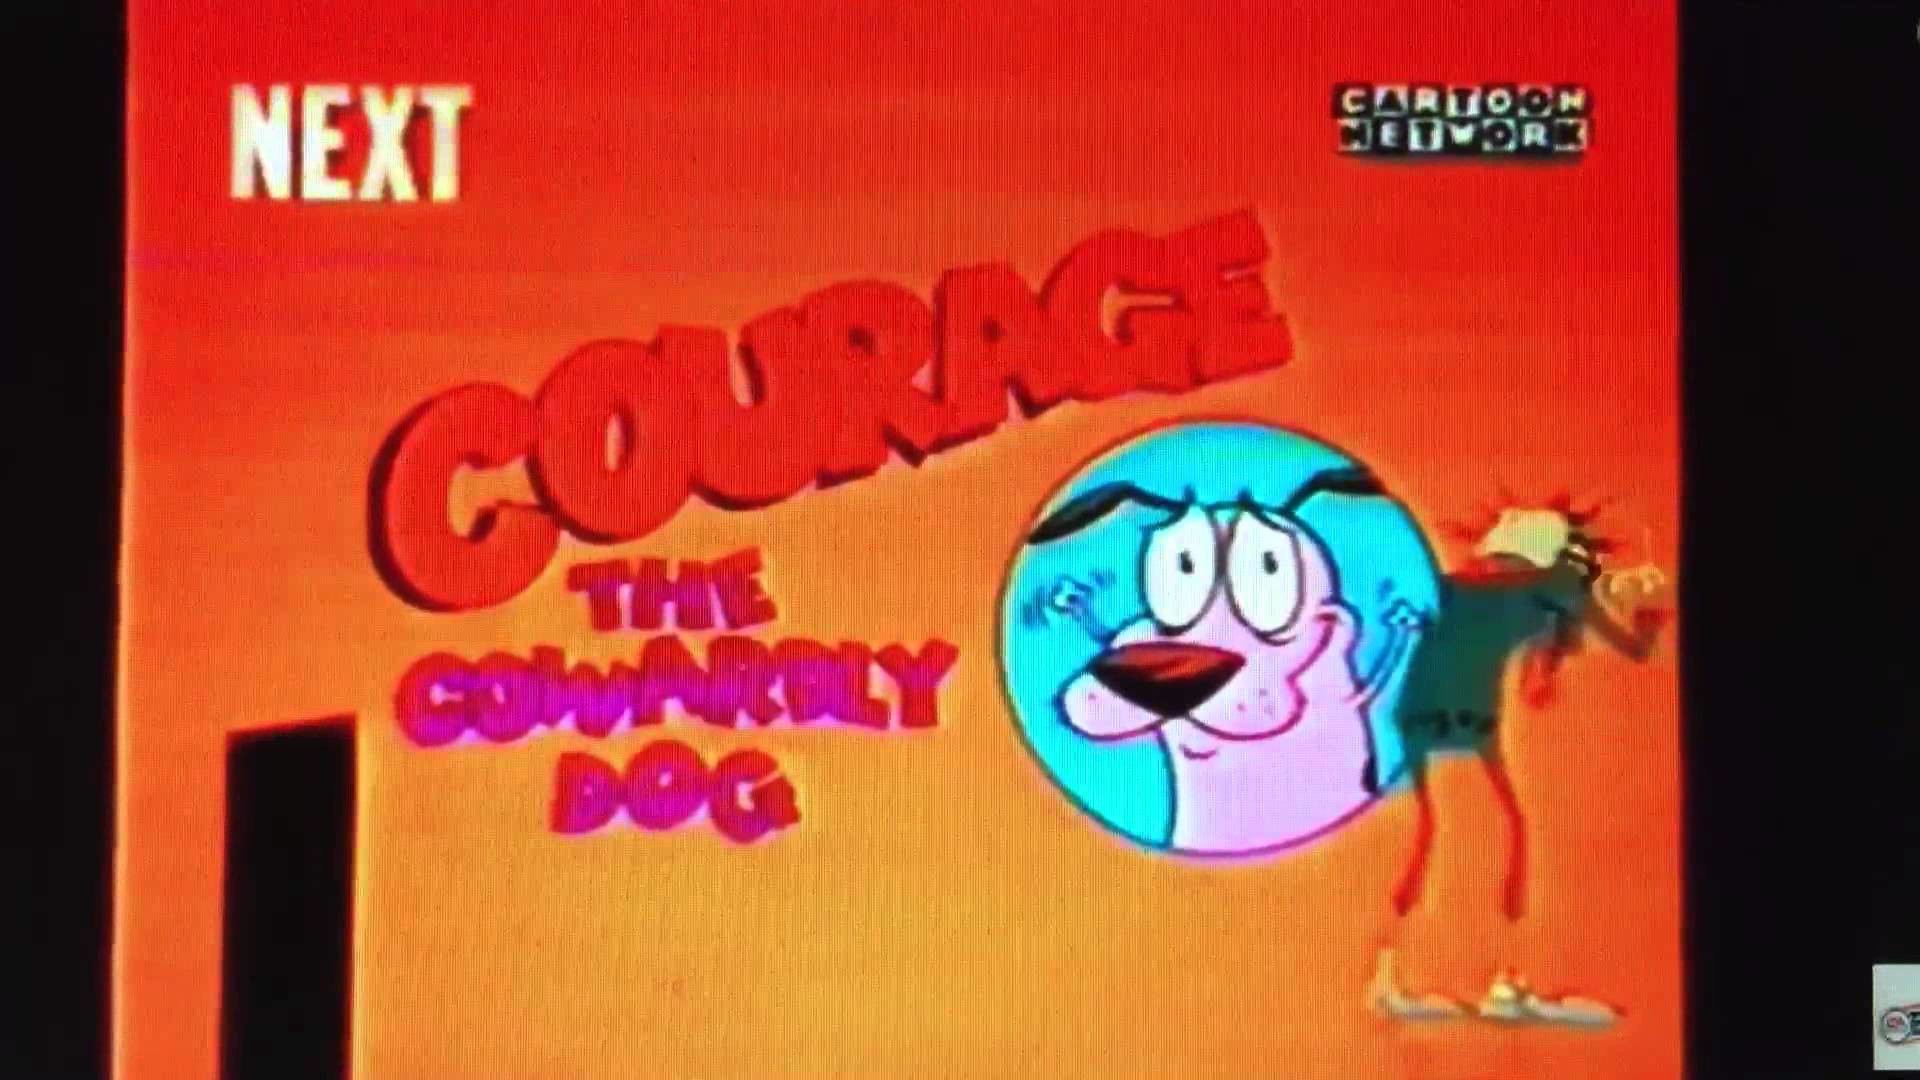 1920x1080 Cartoon Network UK Courage The Cowardly Dog Next 2000